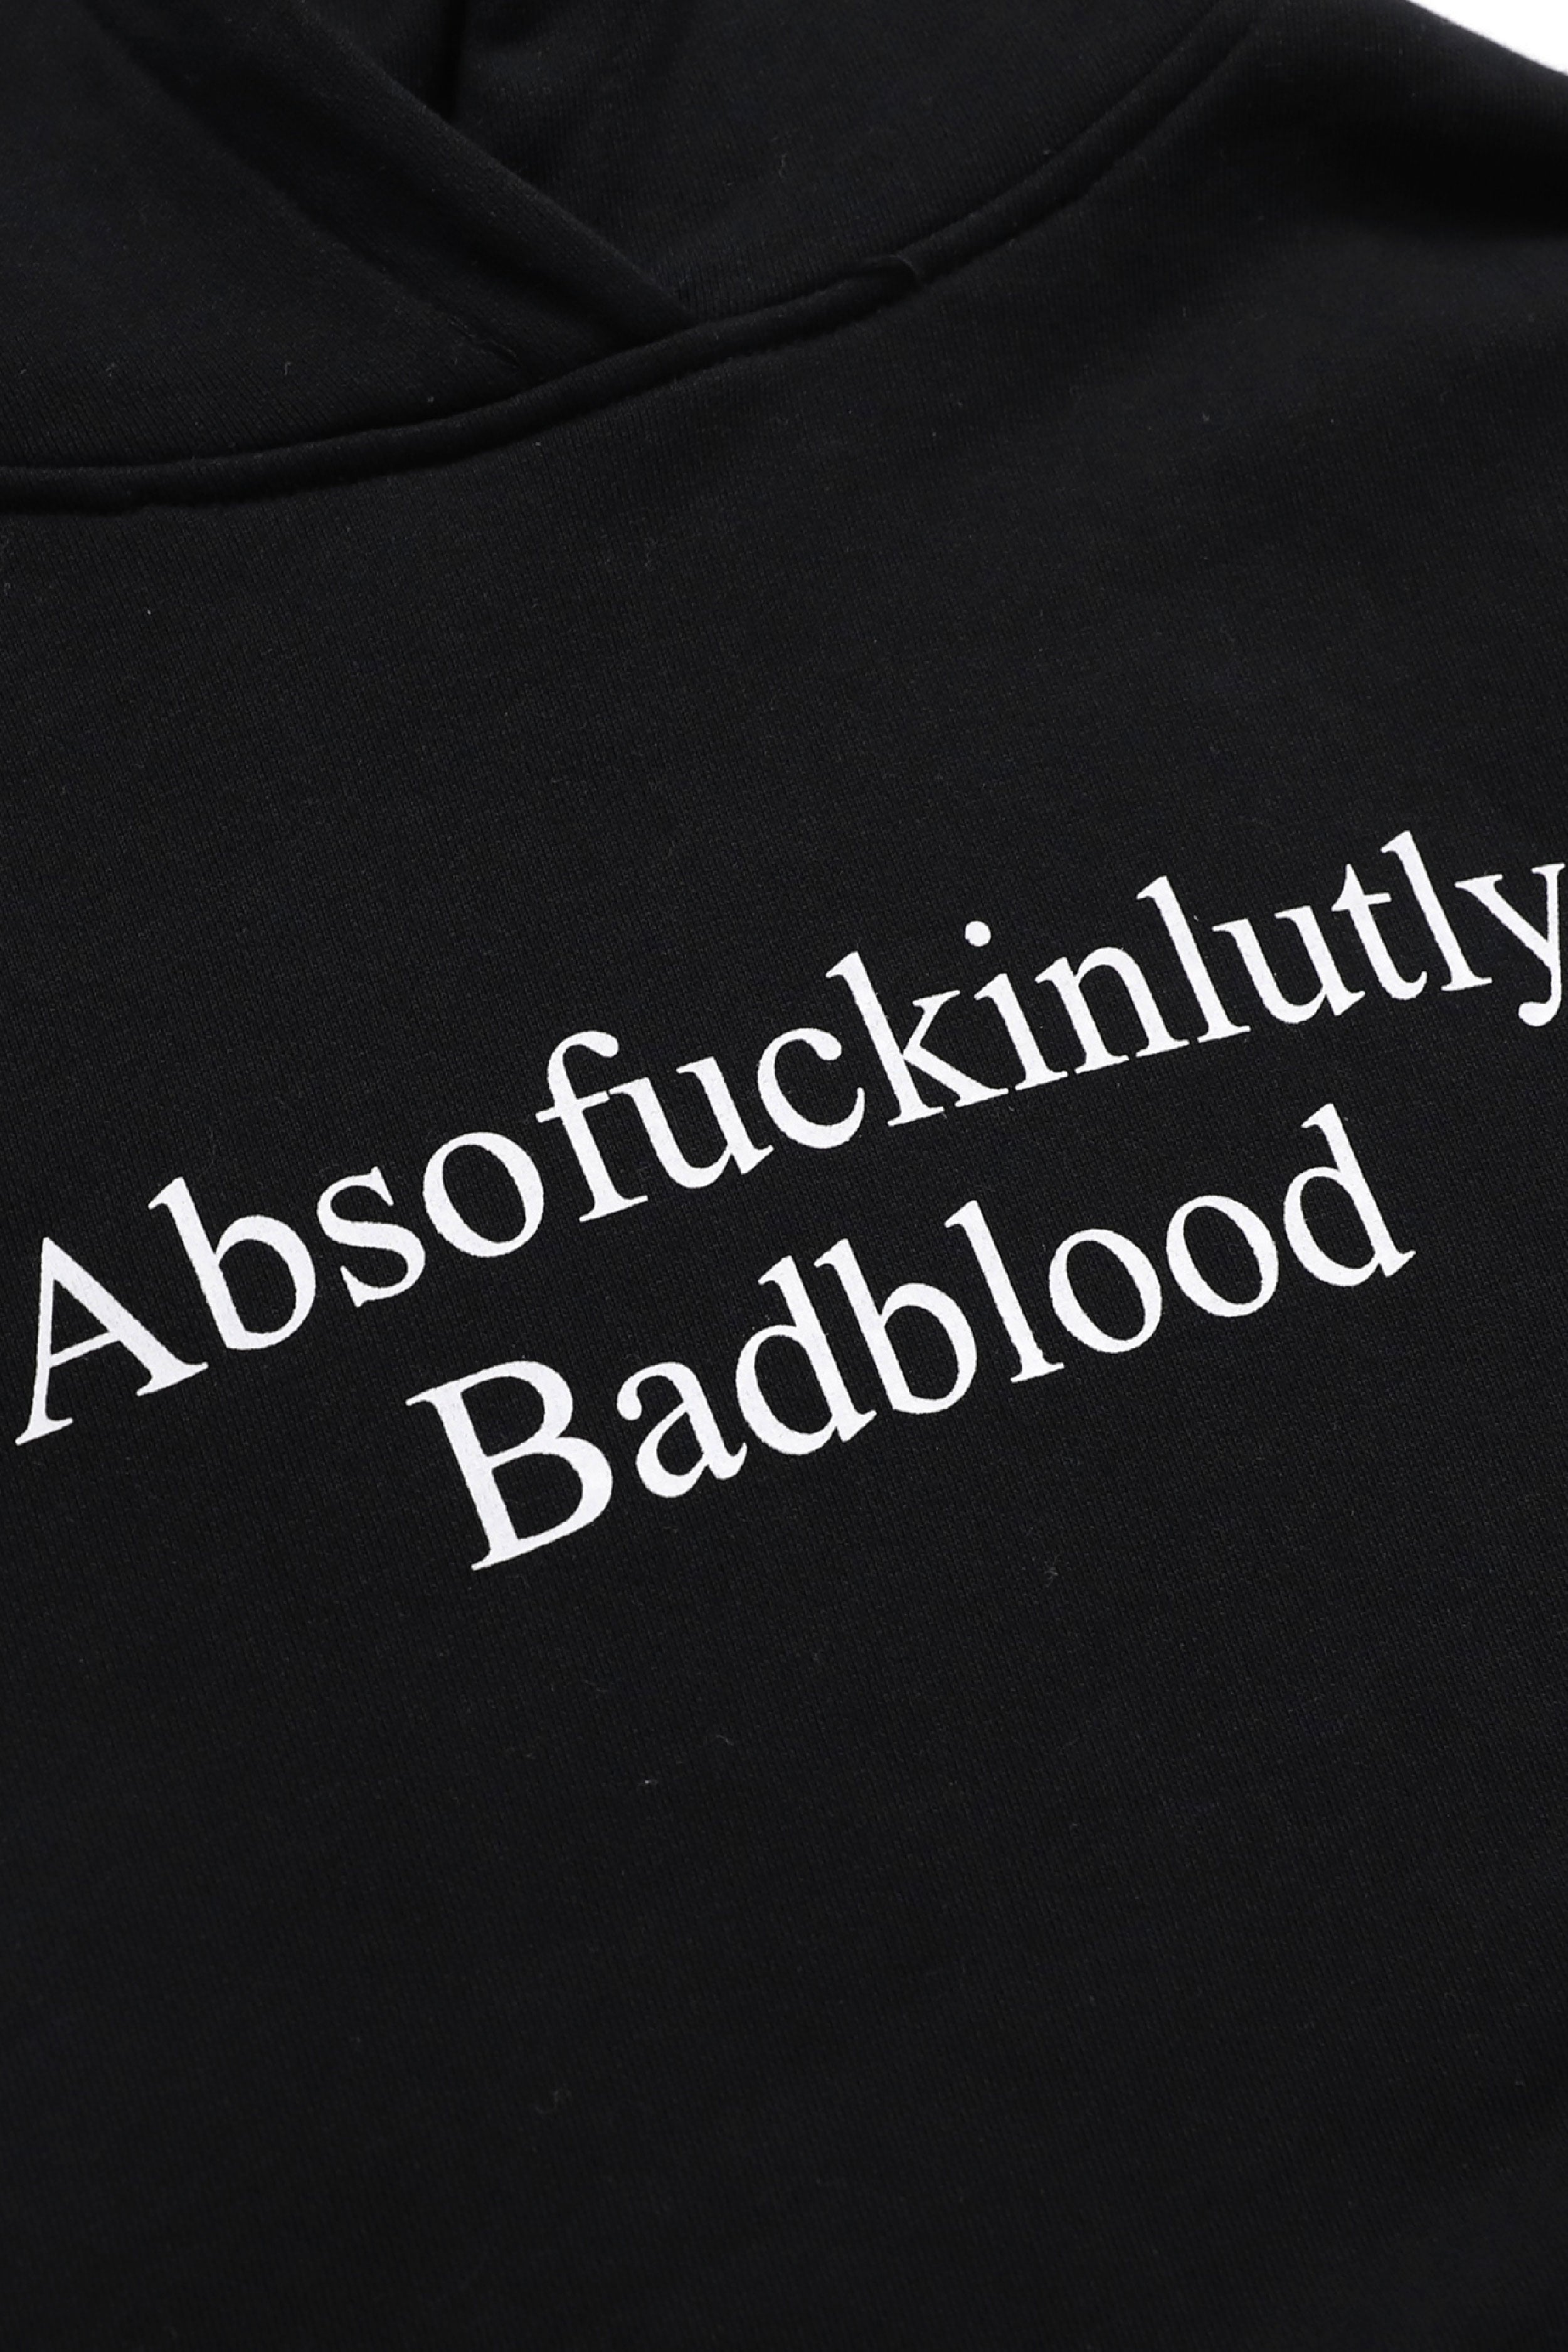 Badblood Absolute 連帽連身衣 黑色